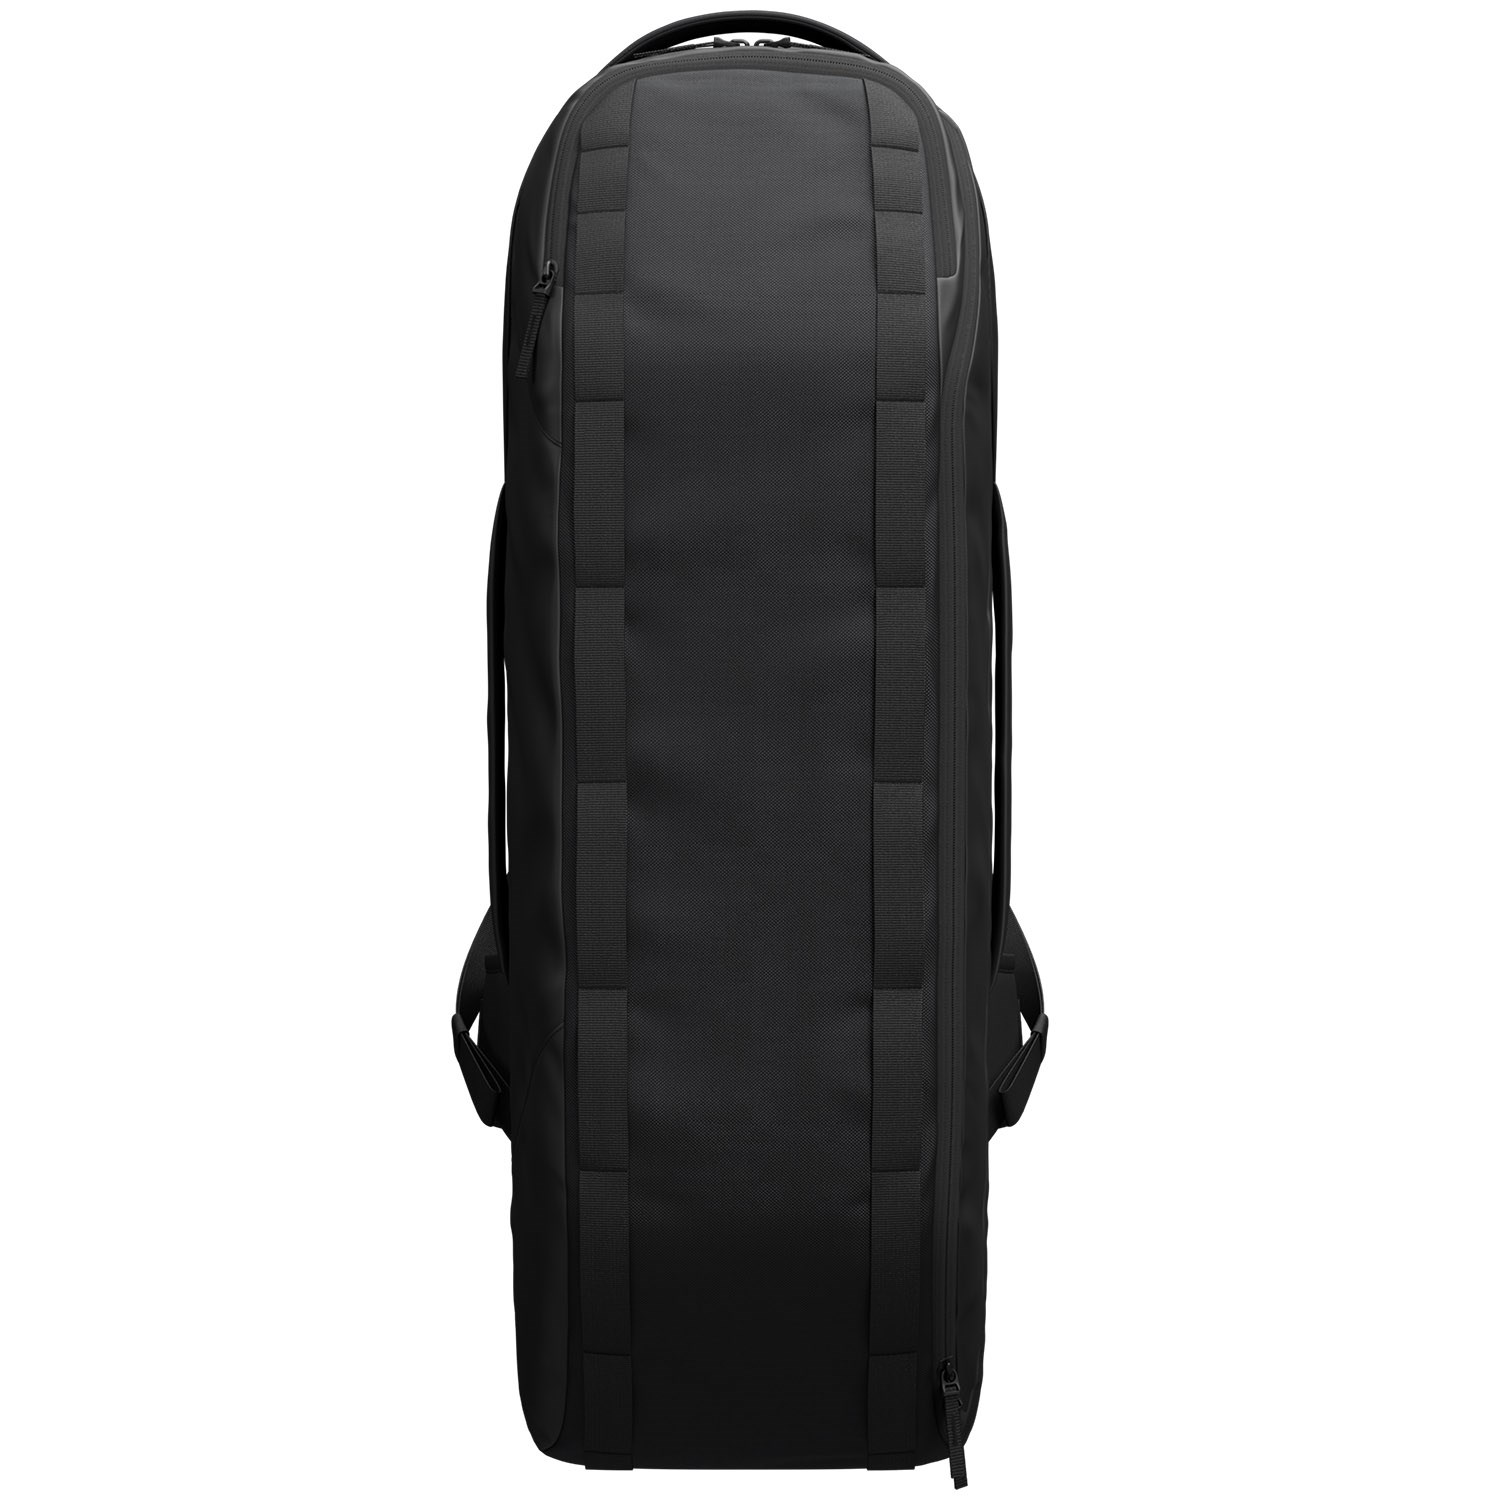 The Hugger Backpack 25L